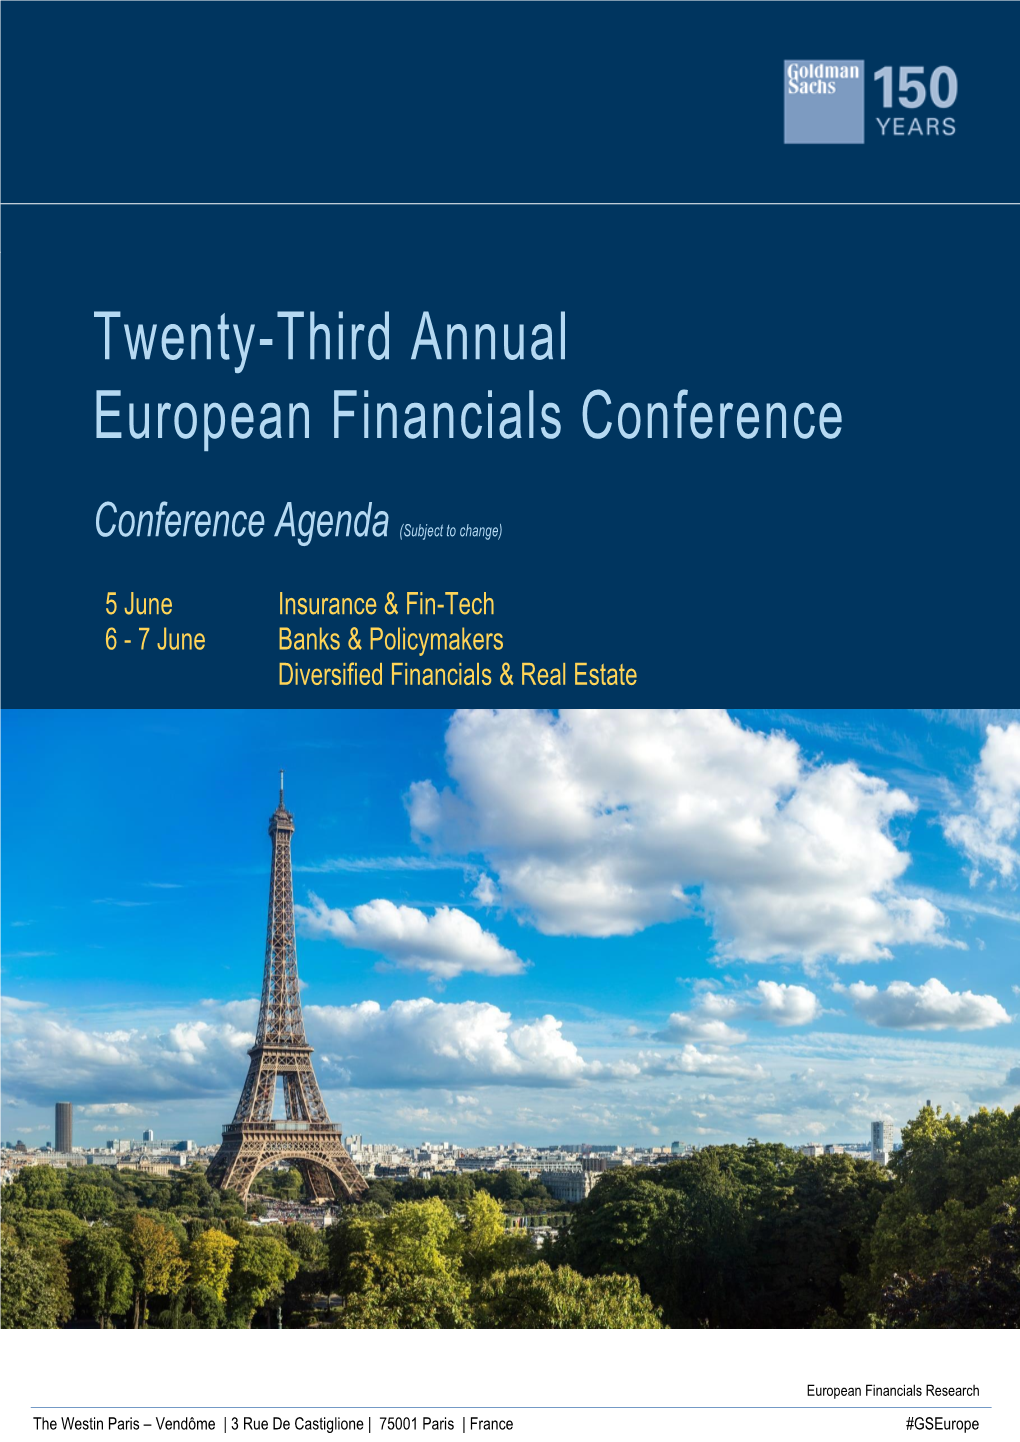 Twenty-Third Annual European Financials Conference